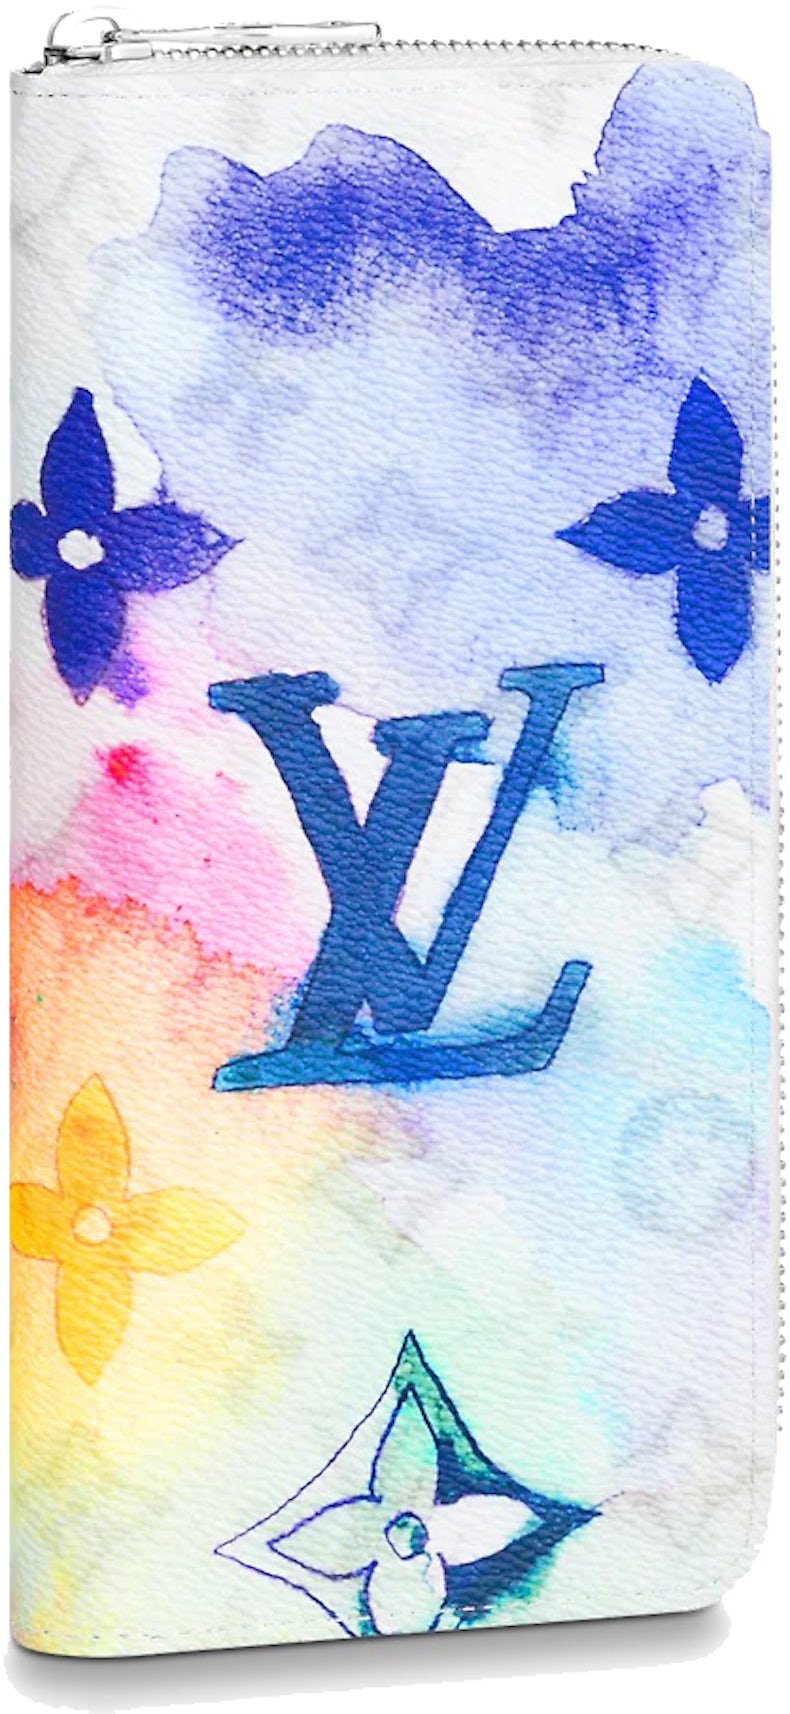 Louis Vuitton Watercolor Monogram Sweater